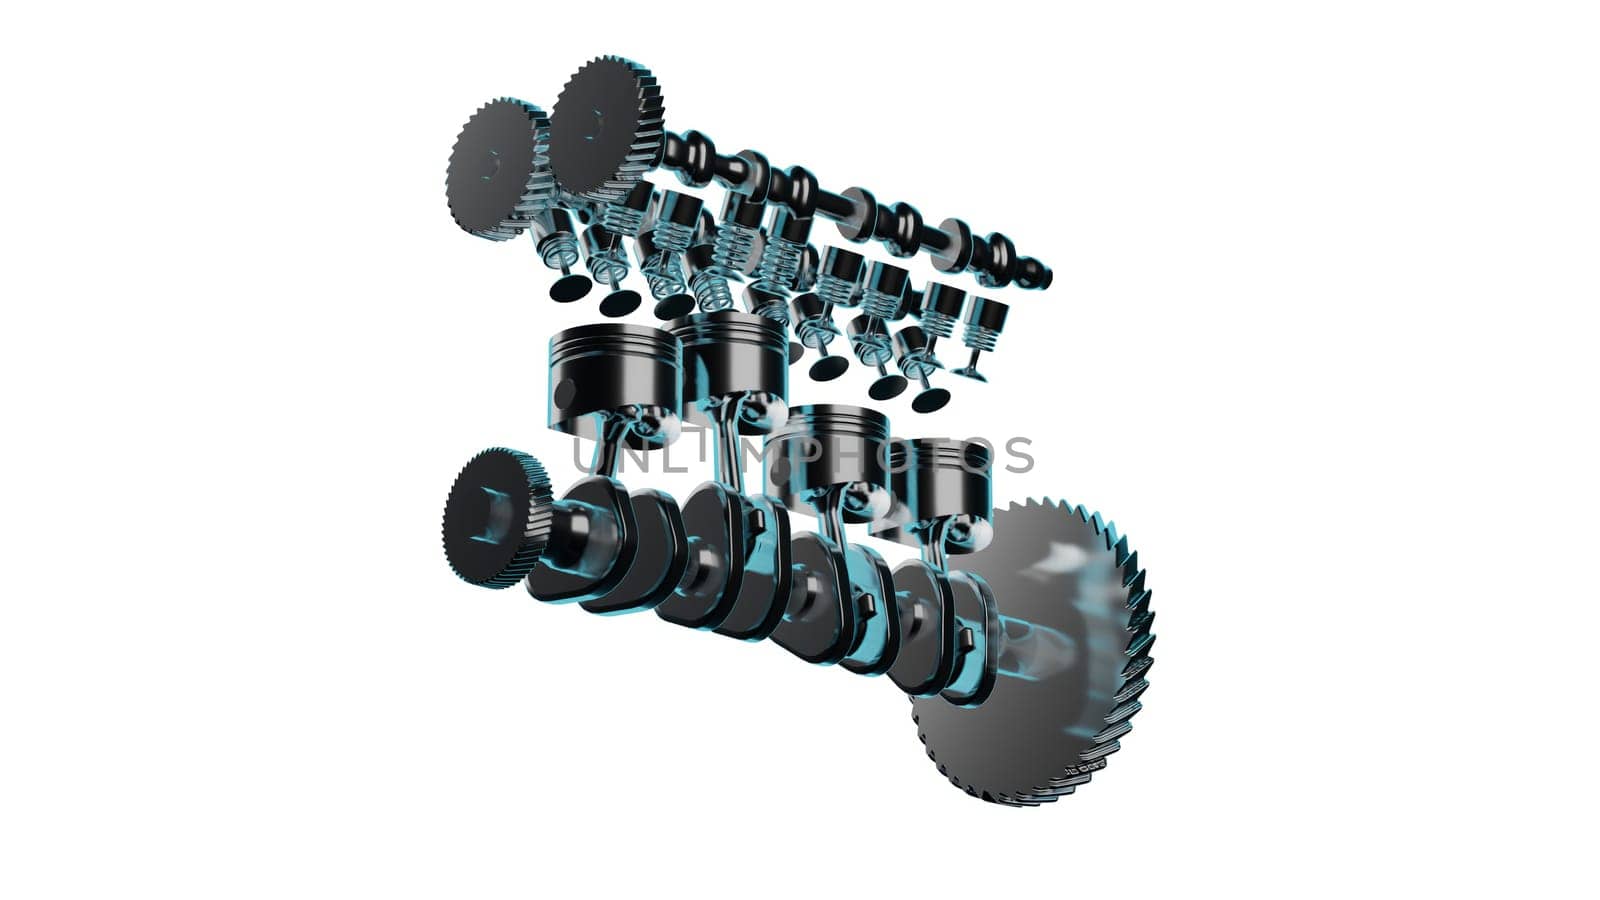 3D illustration of car engine components by DCStudio